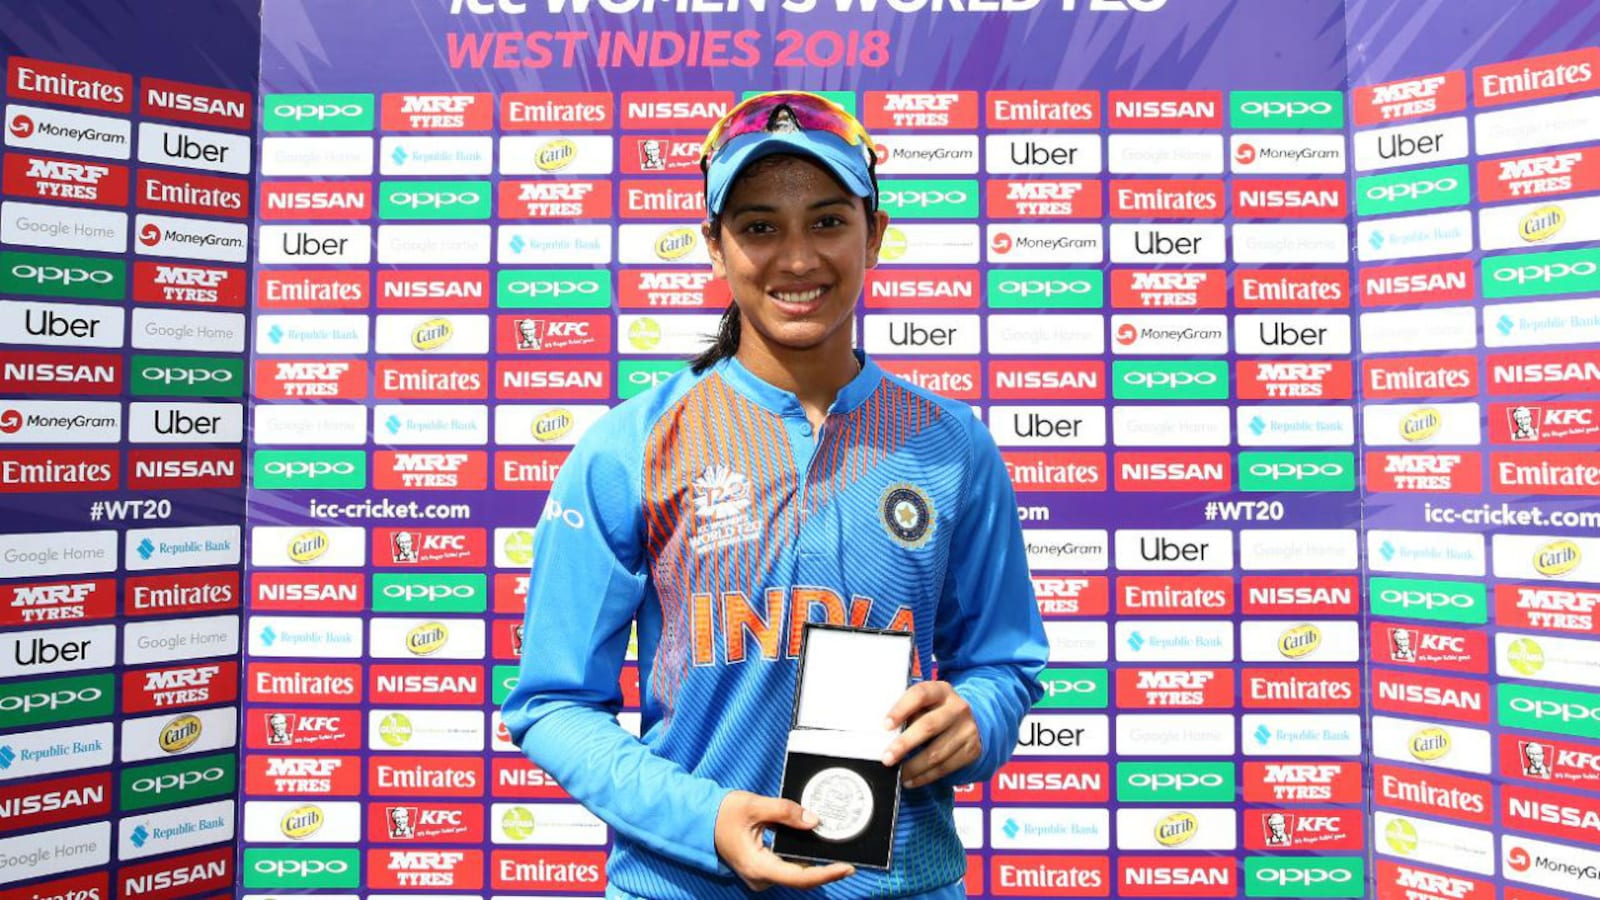 Smriti Mandhana wins ICC 'Women's Cricketer' and 'ODI Player of the year'  awards